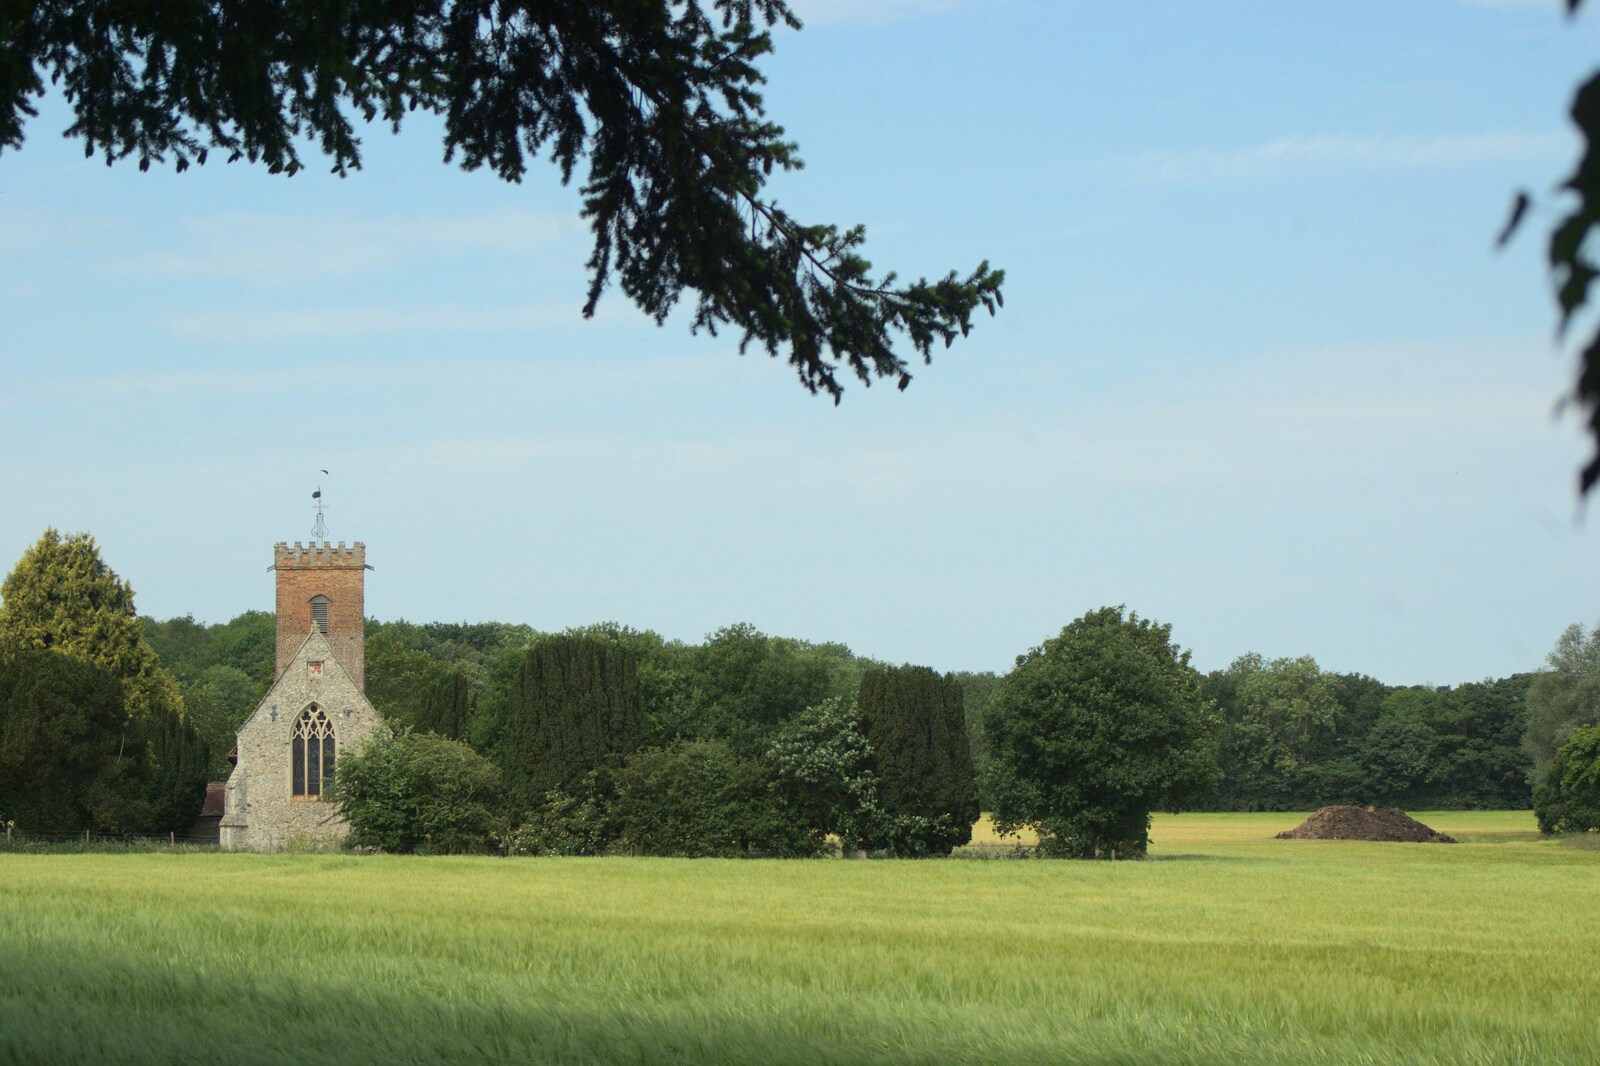 A church in a field from Carlton Park Camping, Saxmundham, Suffolk - 4th June 2011